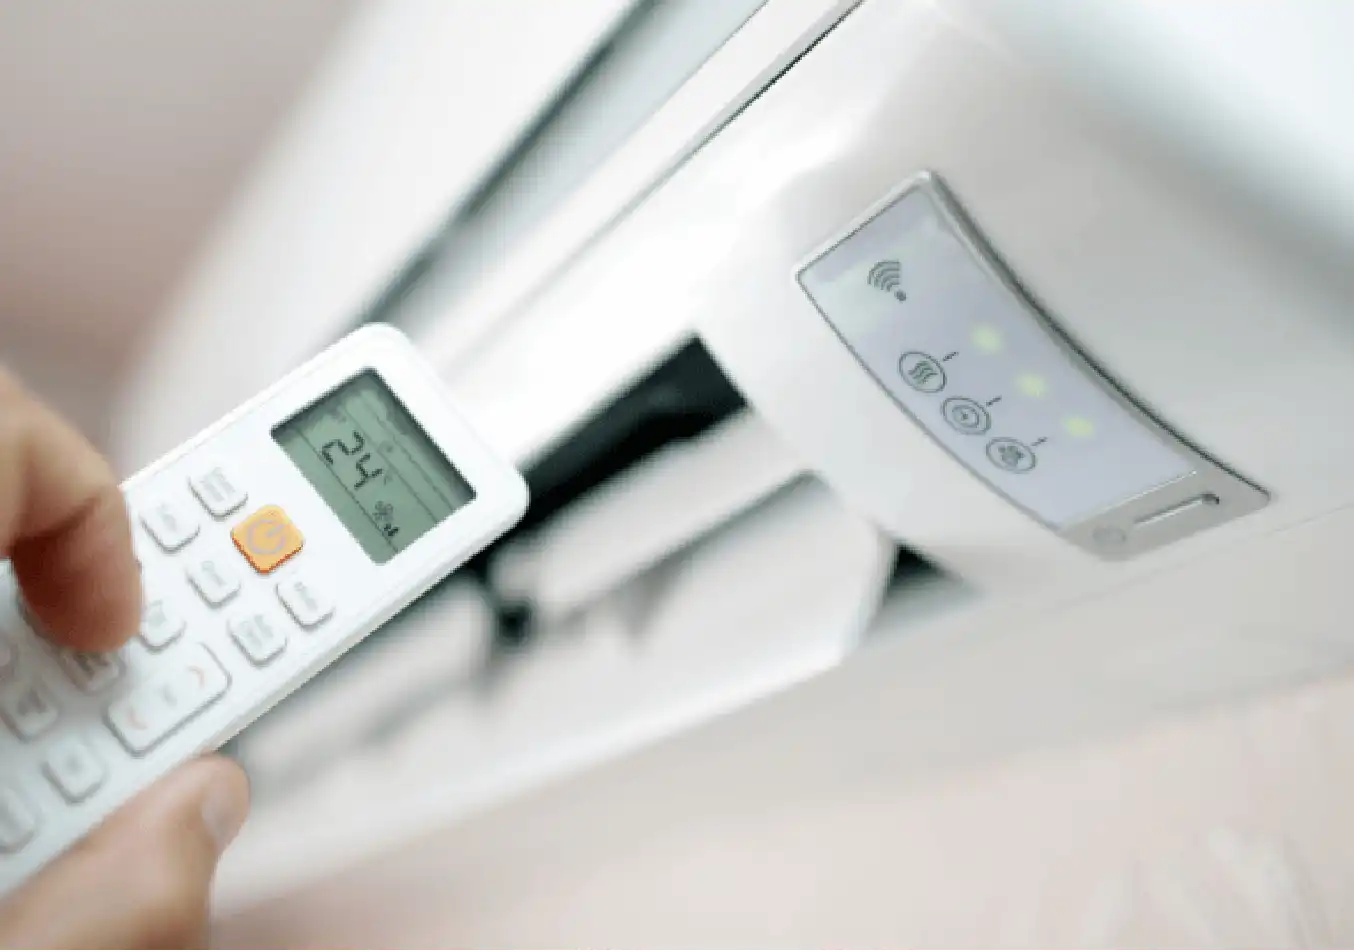 lowering the room temperature via airconditioner